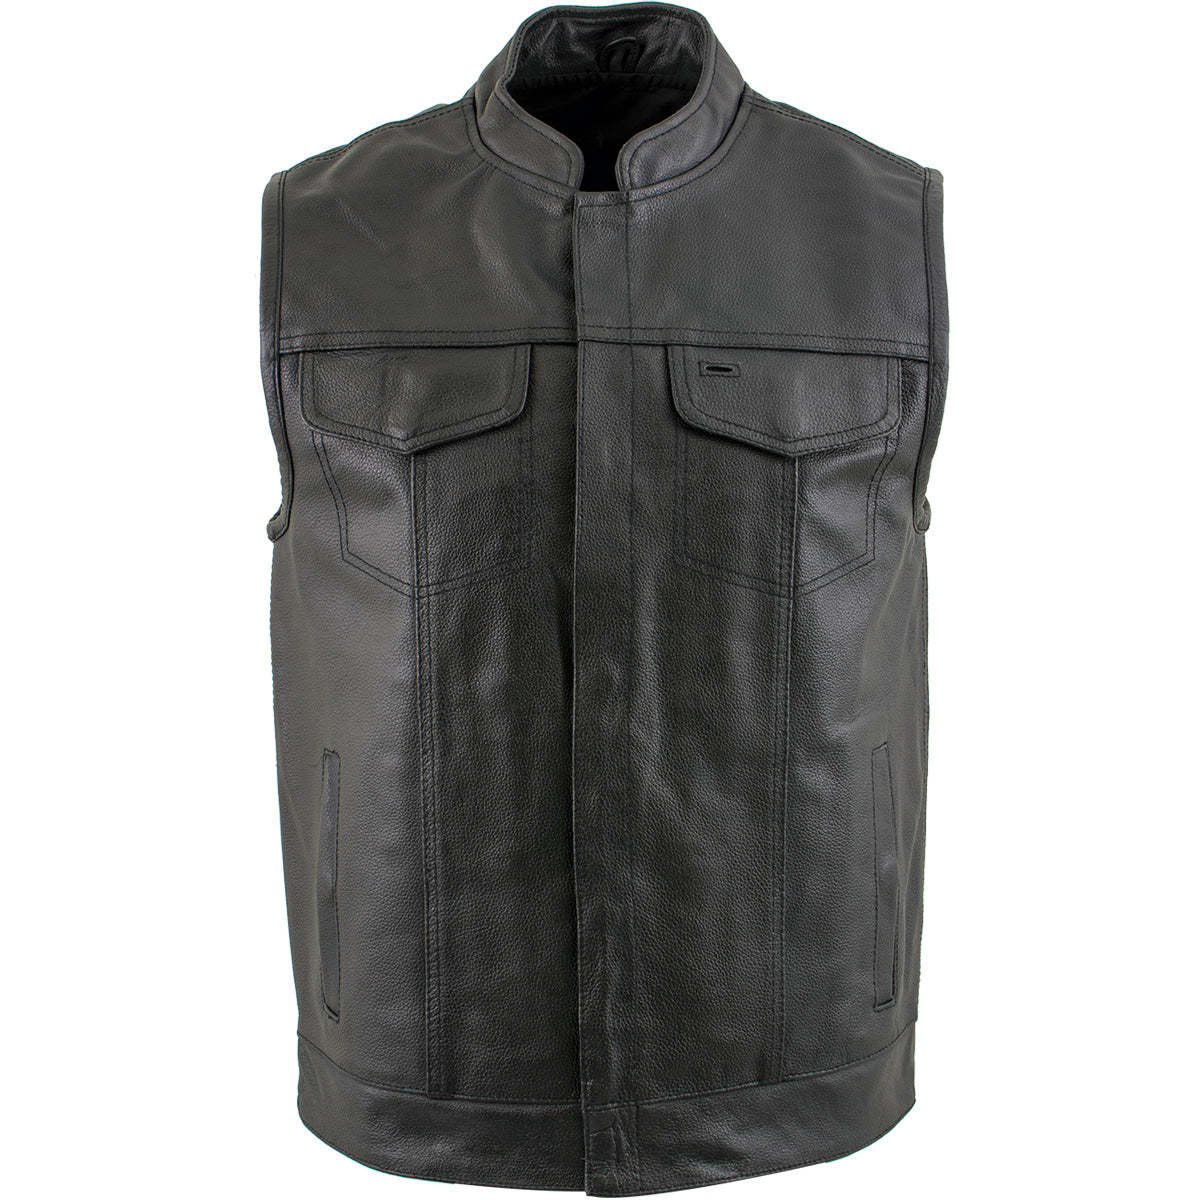 USA Leather 1205 Men's Black 'Combat Style' Motorcycle Biker Leather Vest